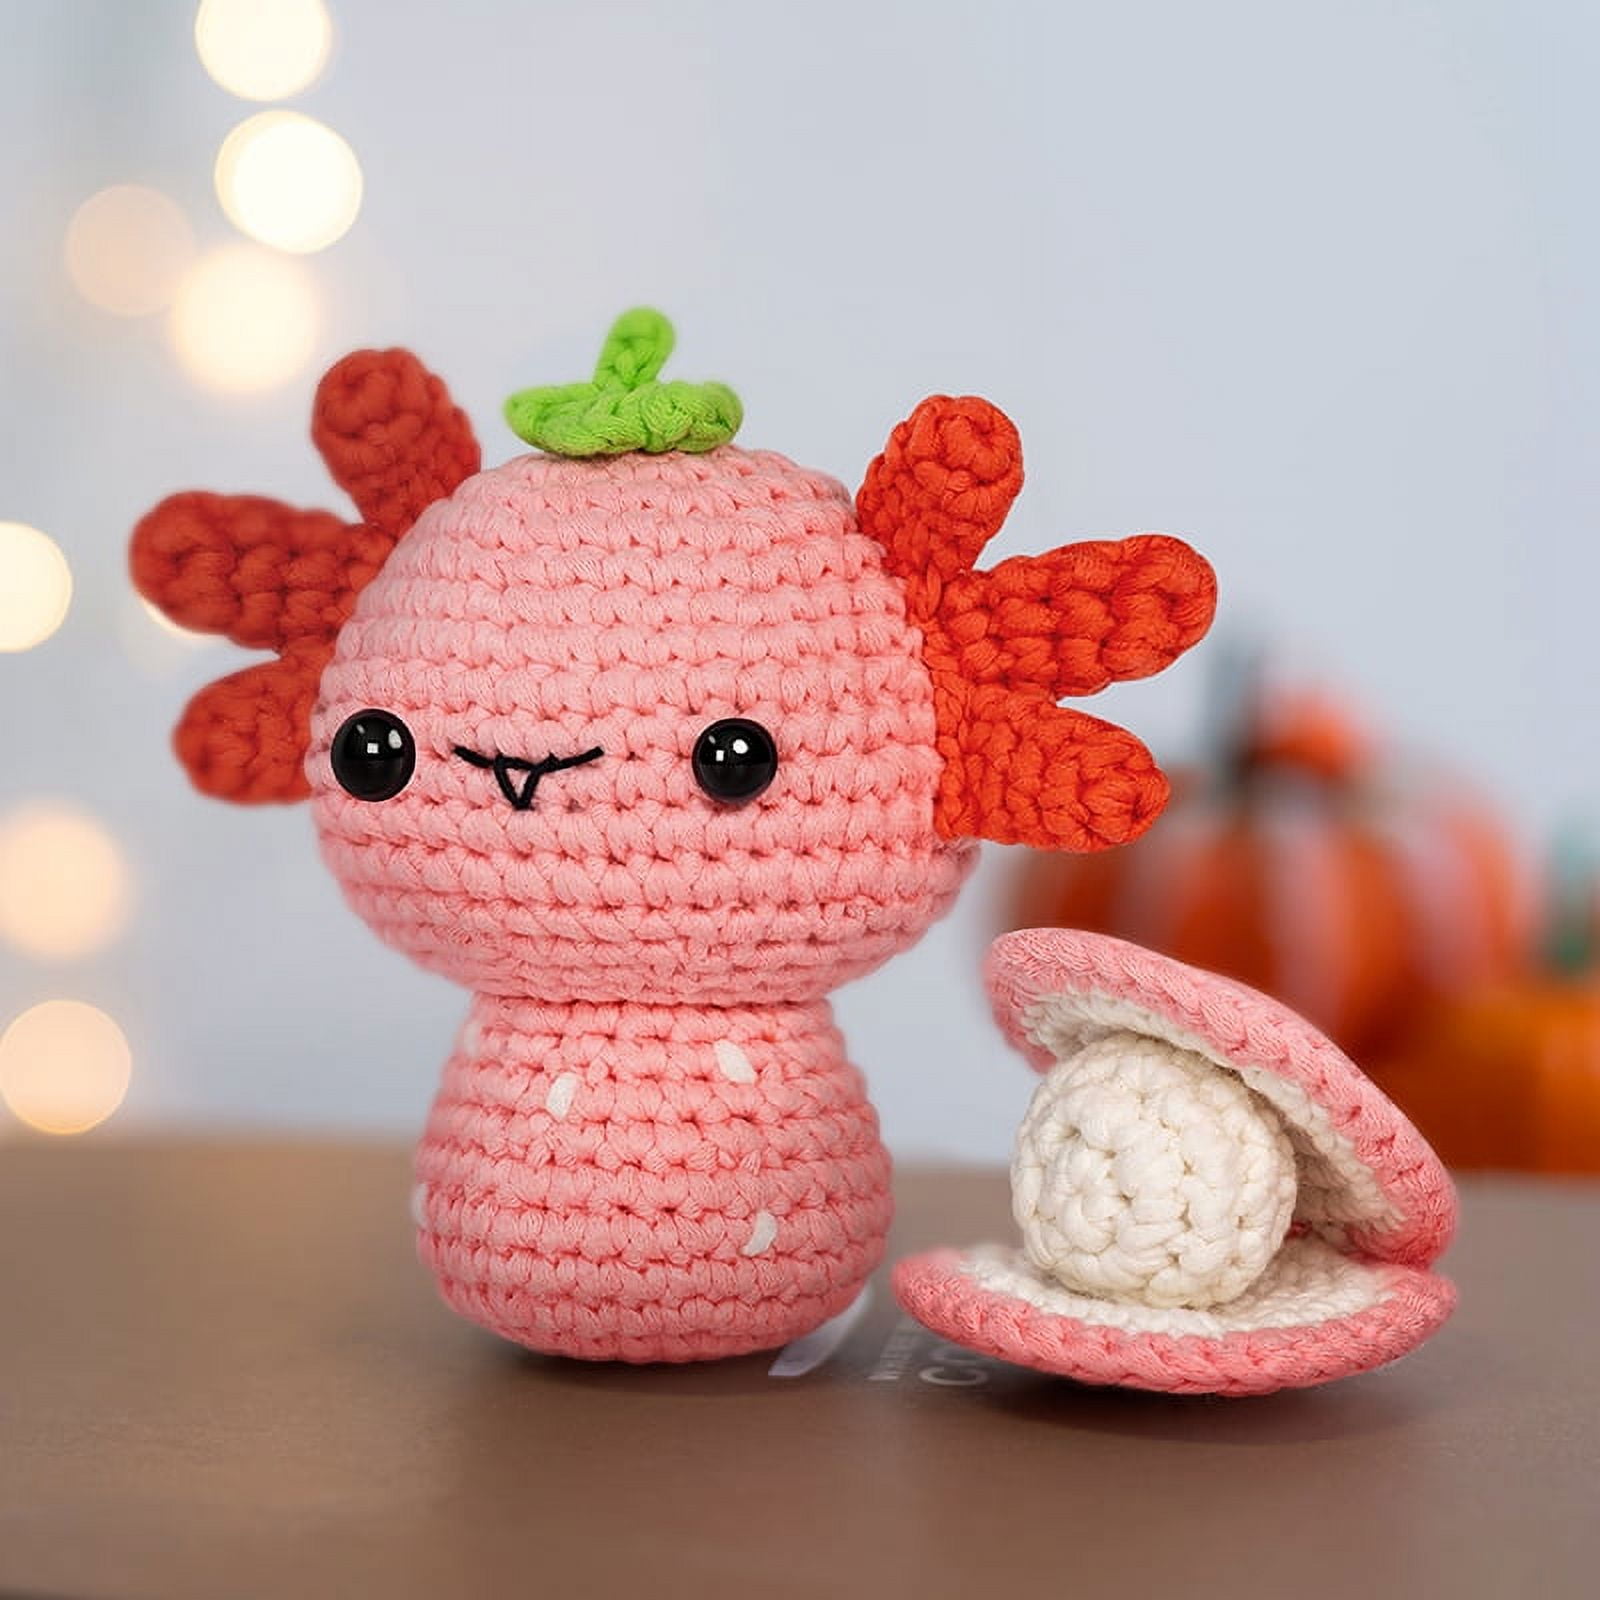 Mewaii® Crochet Boba Crochet Kit for Beginners with Easy Peasy Yarn